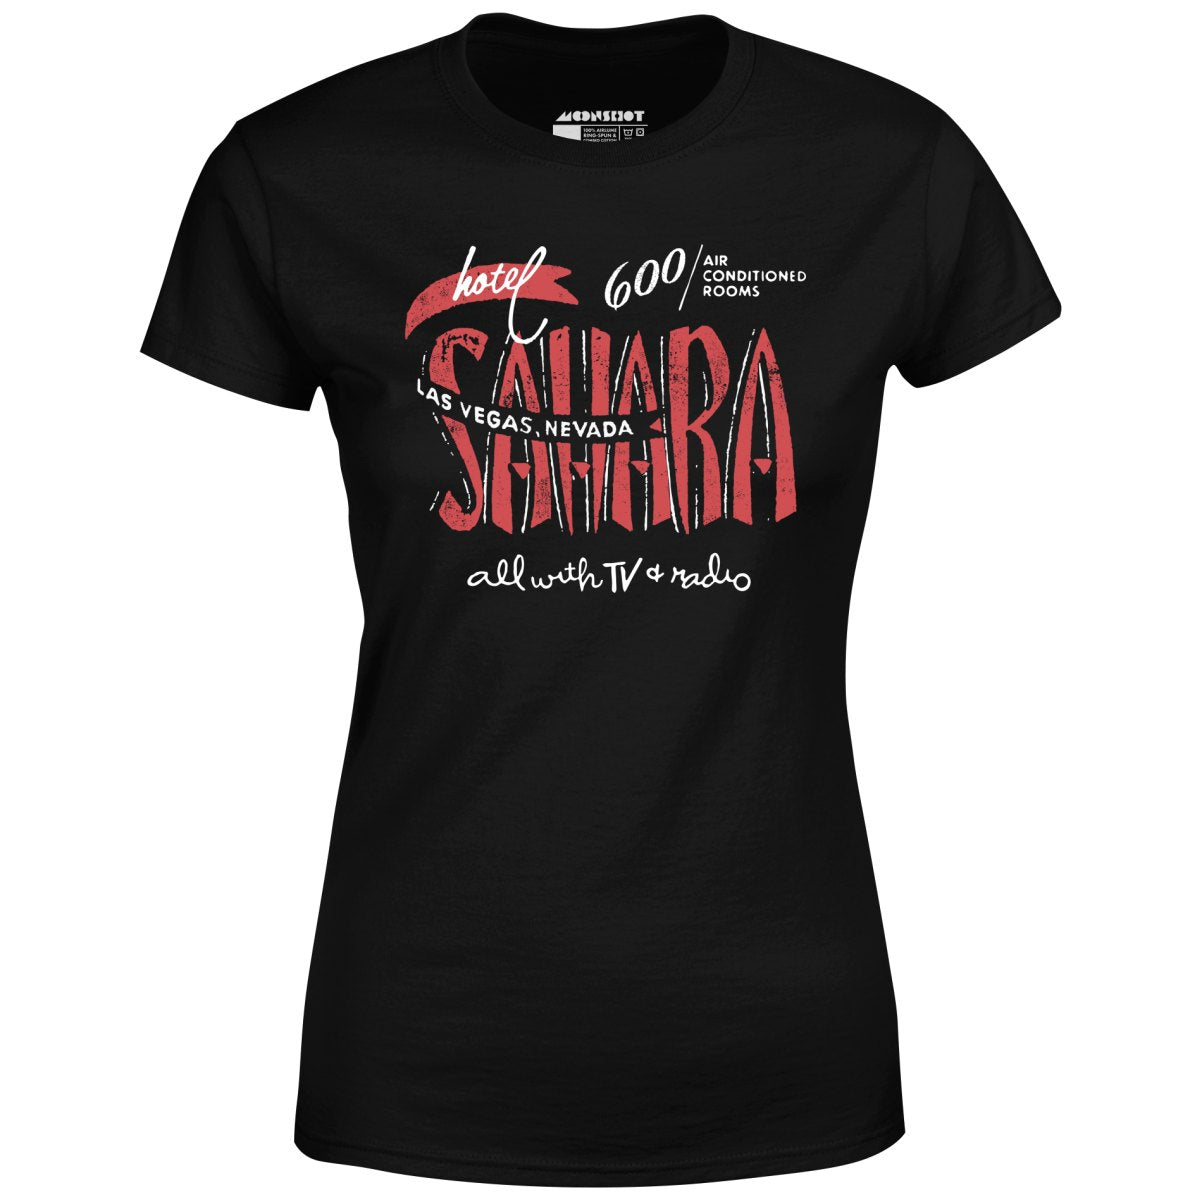 Hotel Sahara - Vintage Las Vegas - Women's T-Shirt